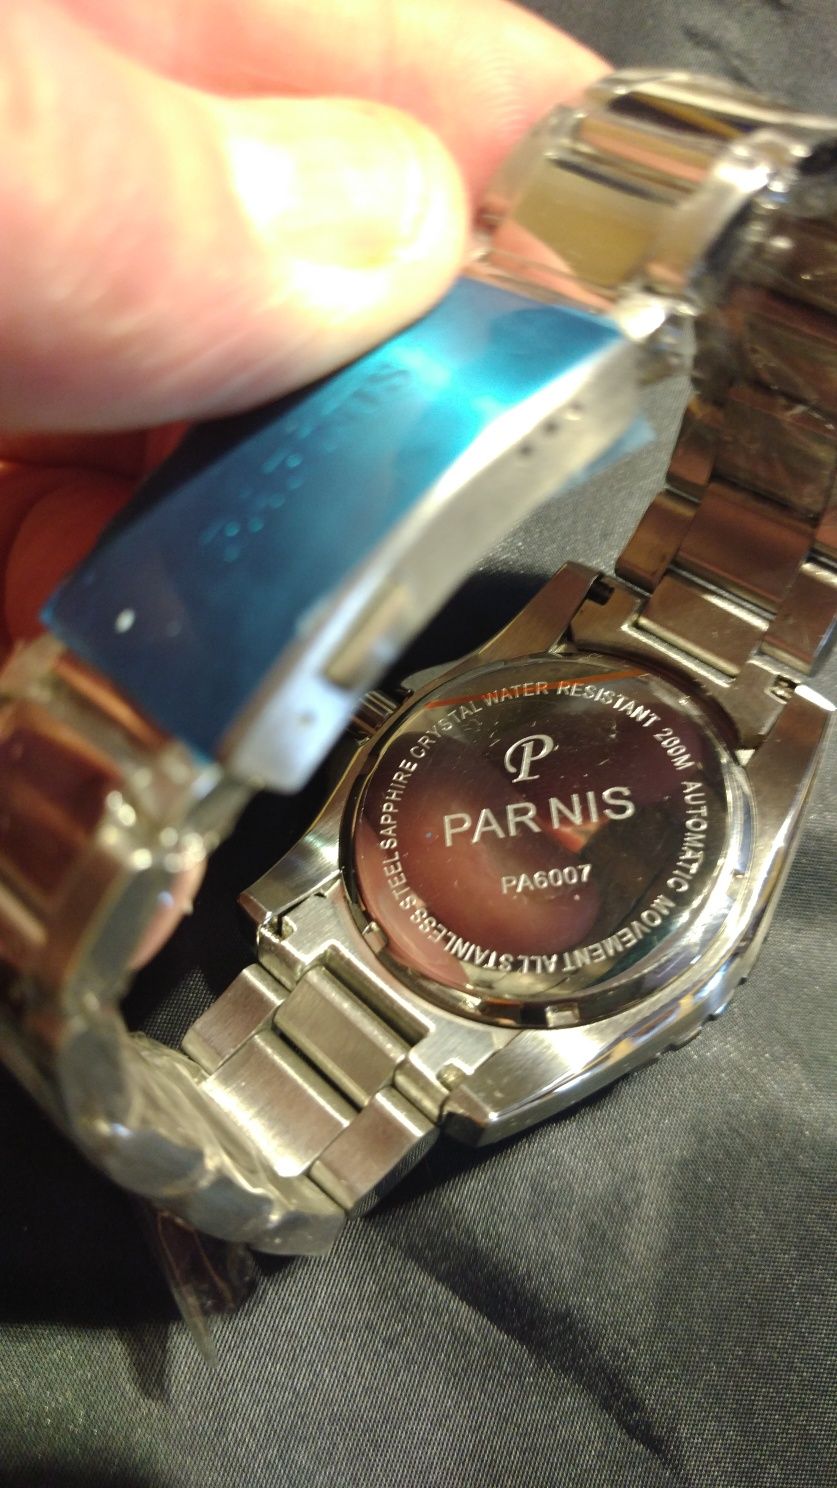 zegarek Parnis PA6007 diver nurek szafirowe szkiełko wr 200